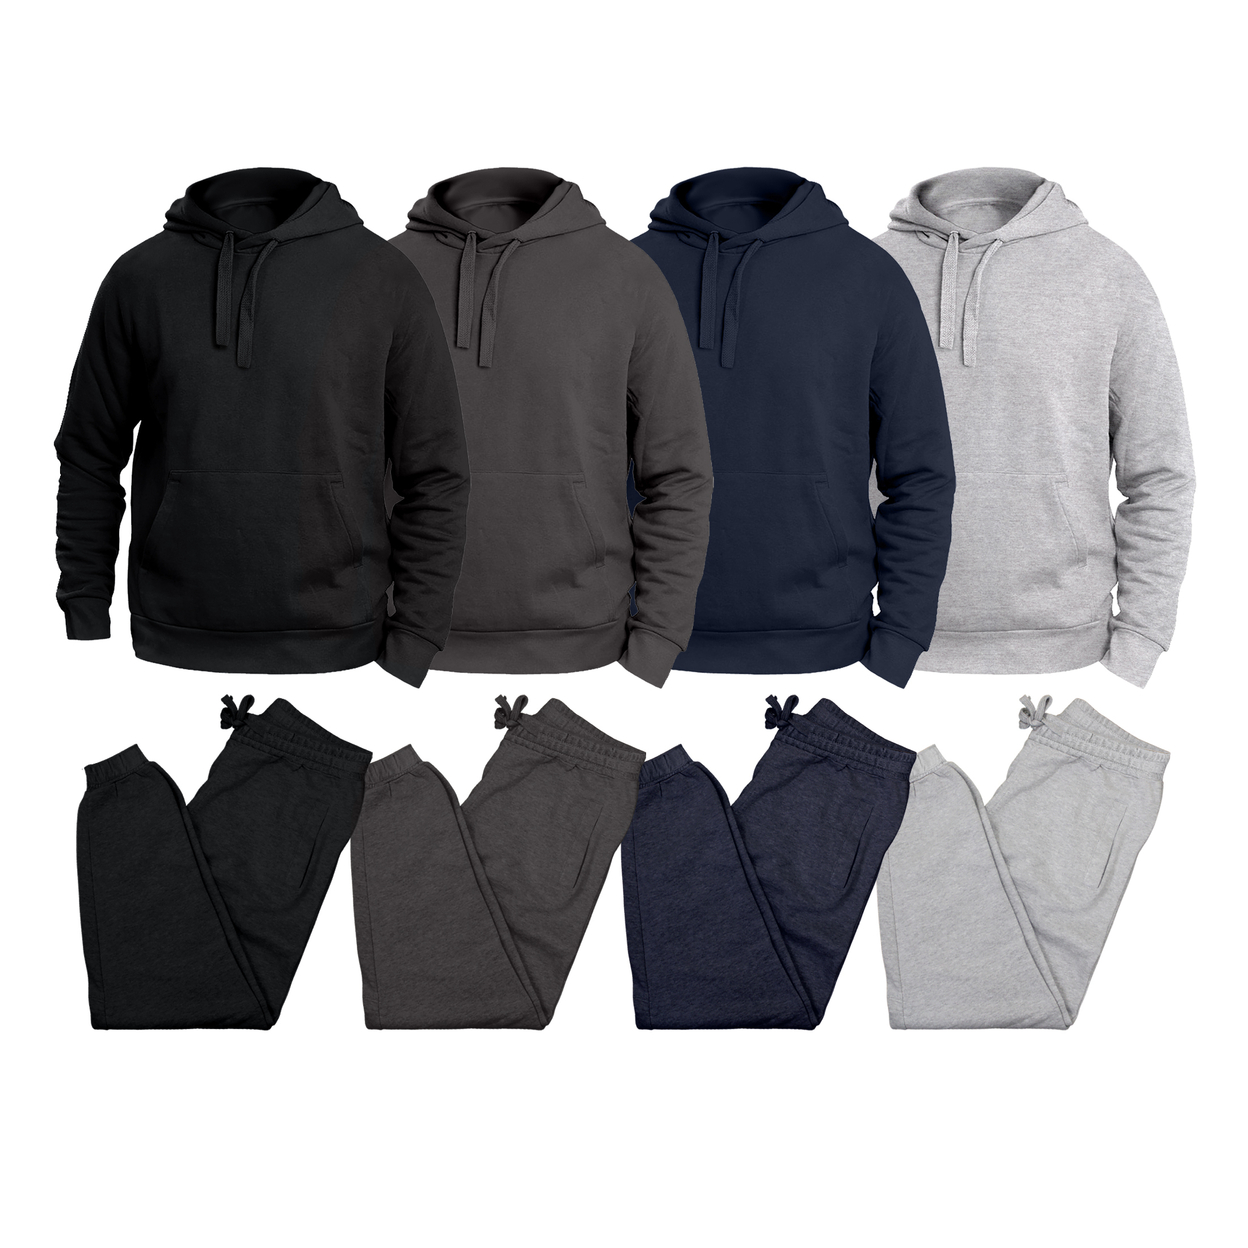 Multi-Pack: Big & Tall Men's Winter Warm Cozy Athletic Fleece Lined Multi-Pocket Cargo Sweatsuit - Grey, 1-pack, Medium